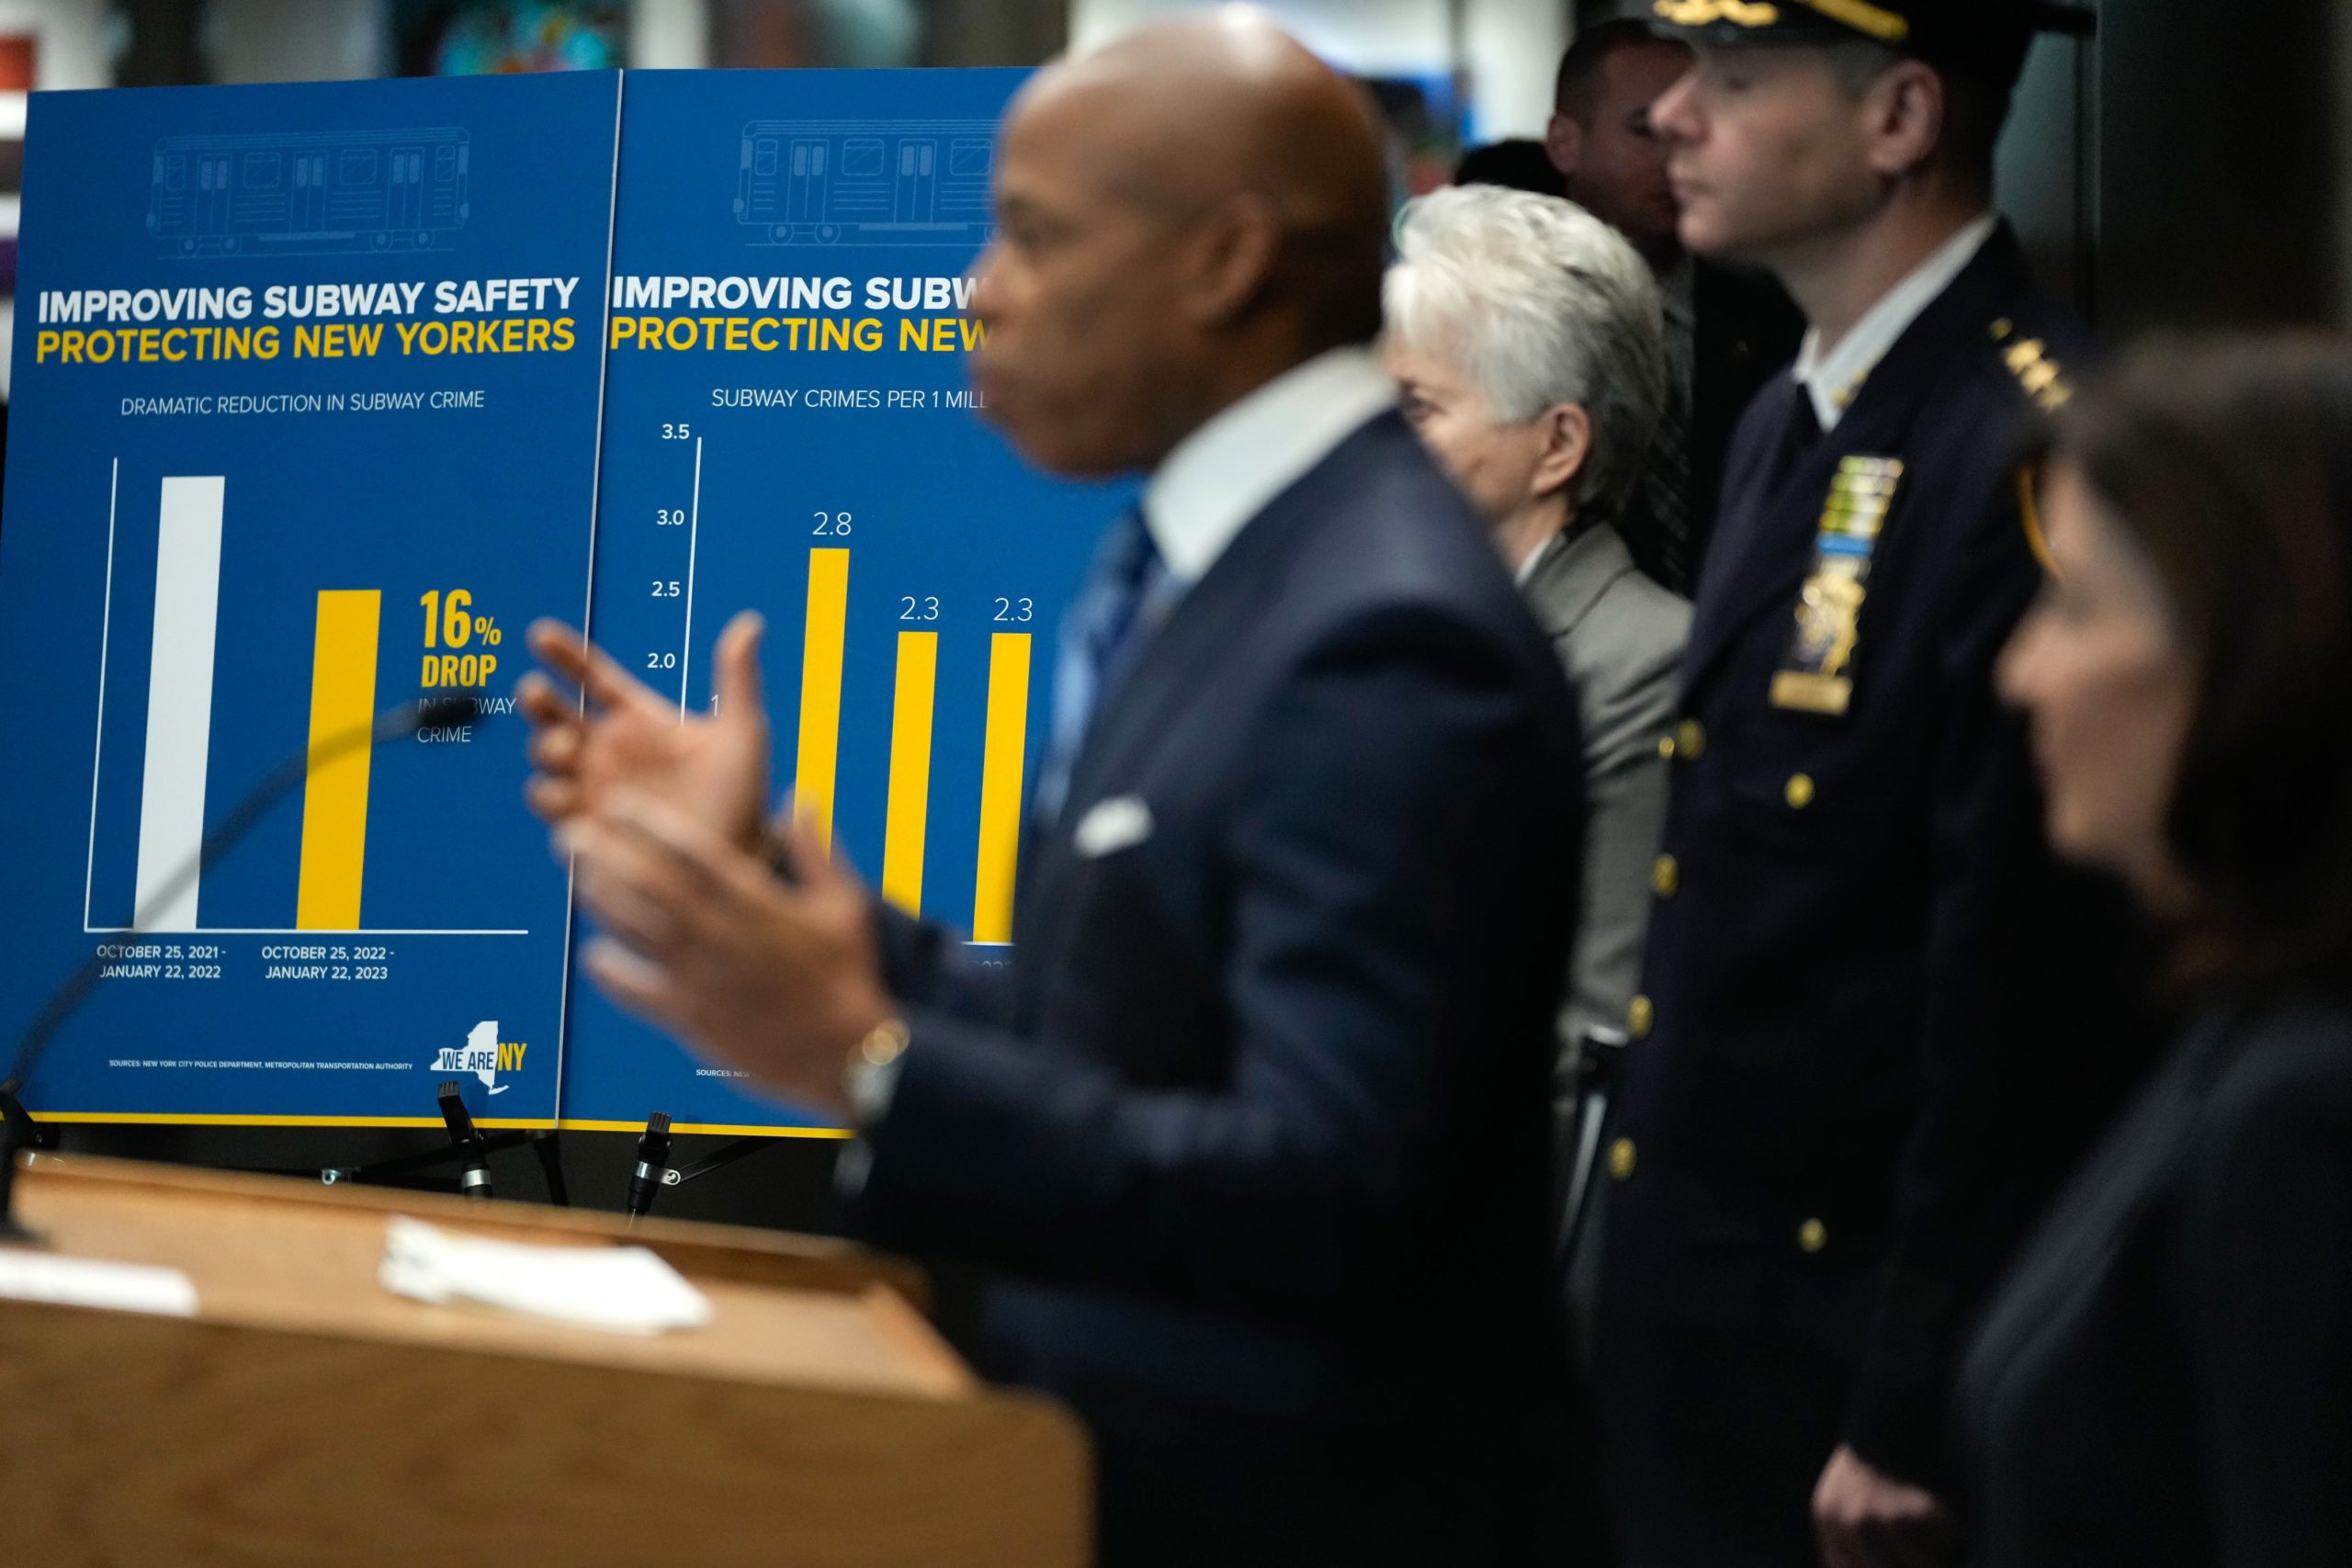 Subway crime down, officials say